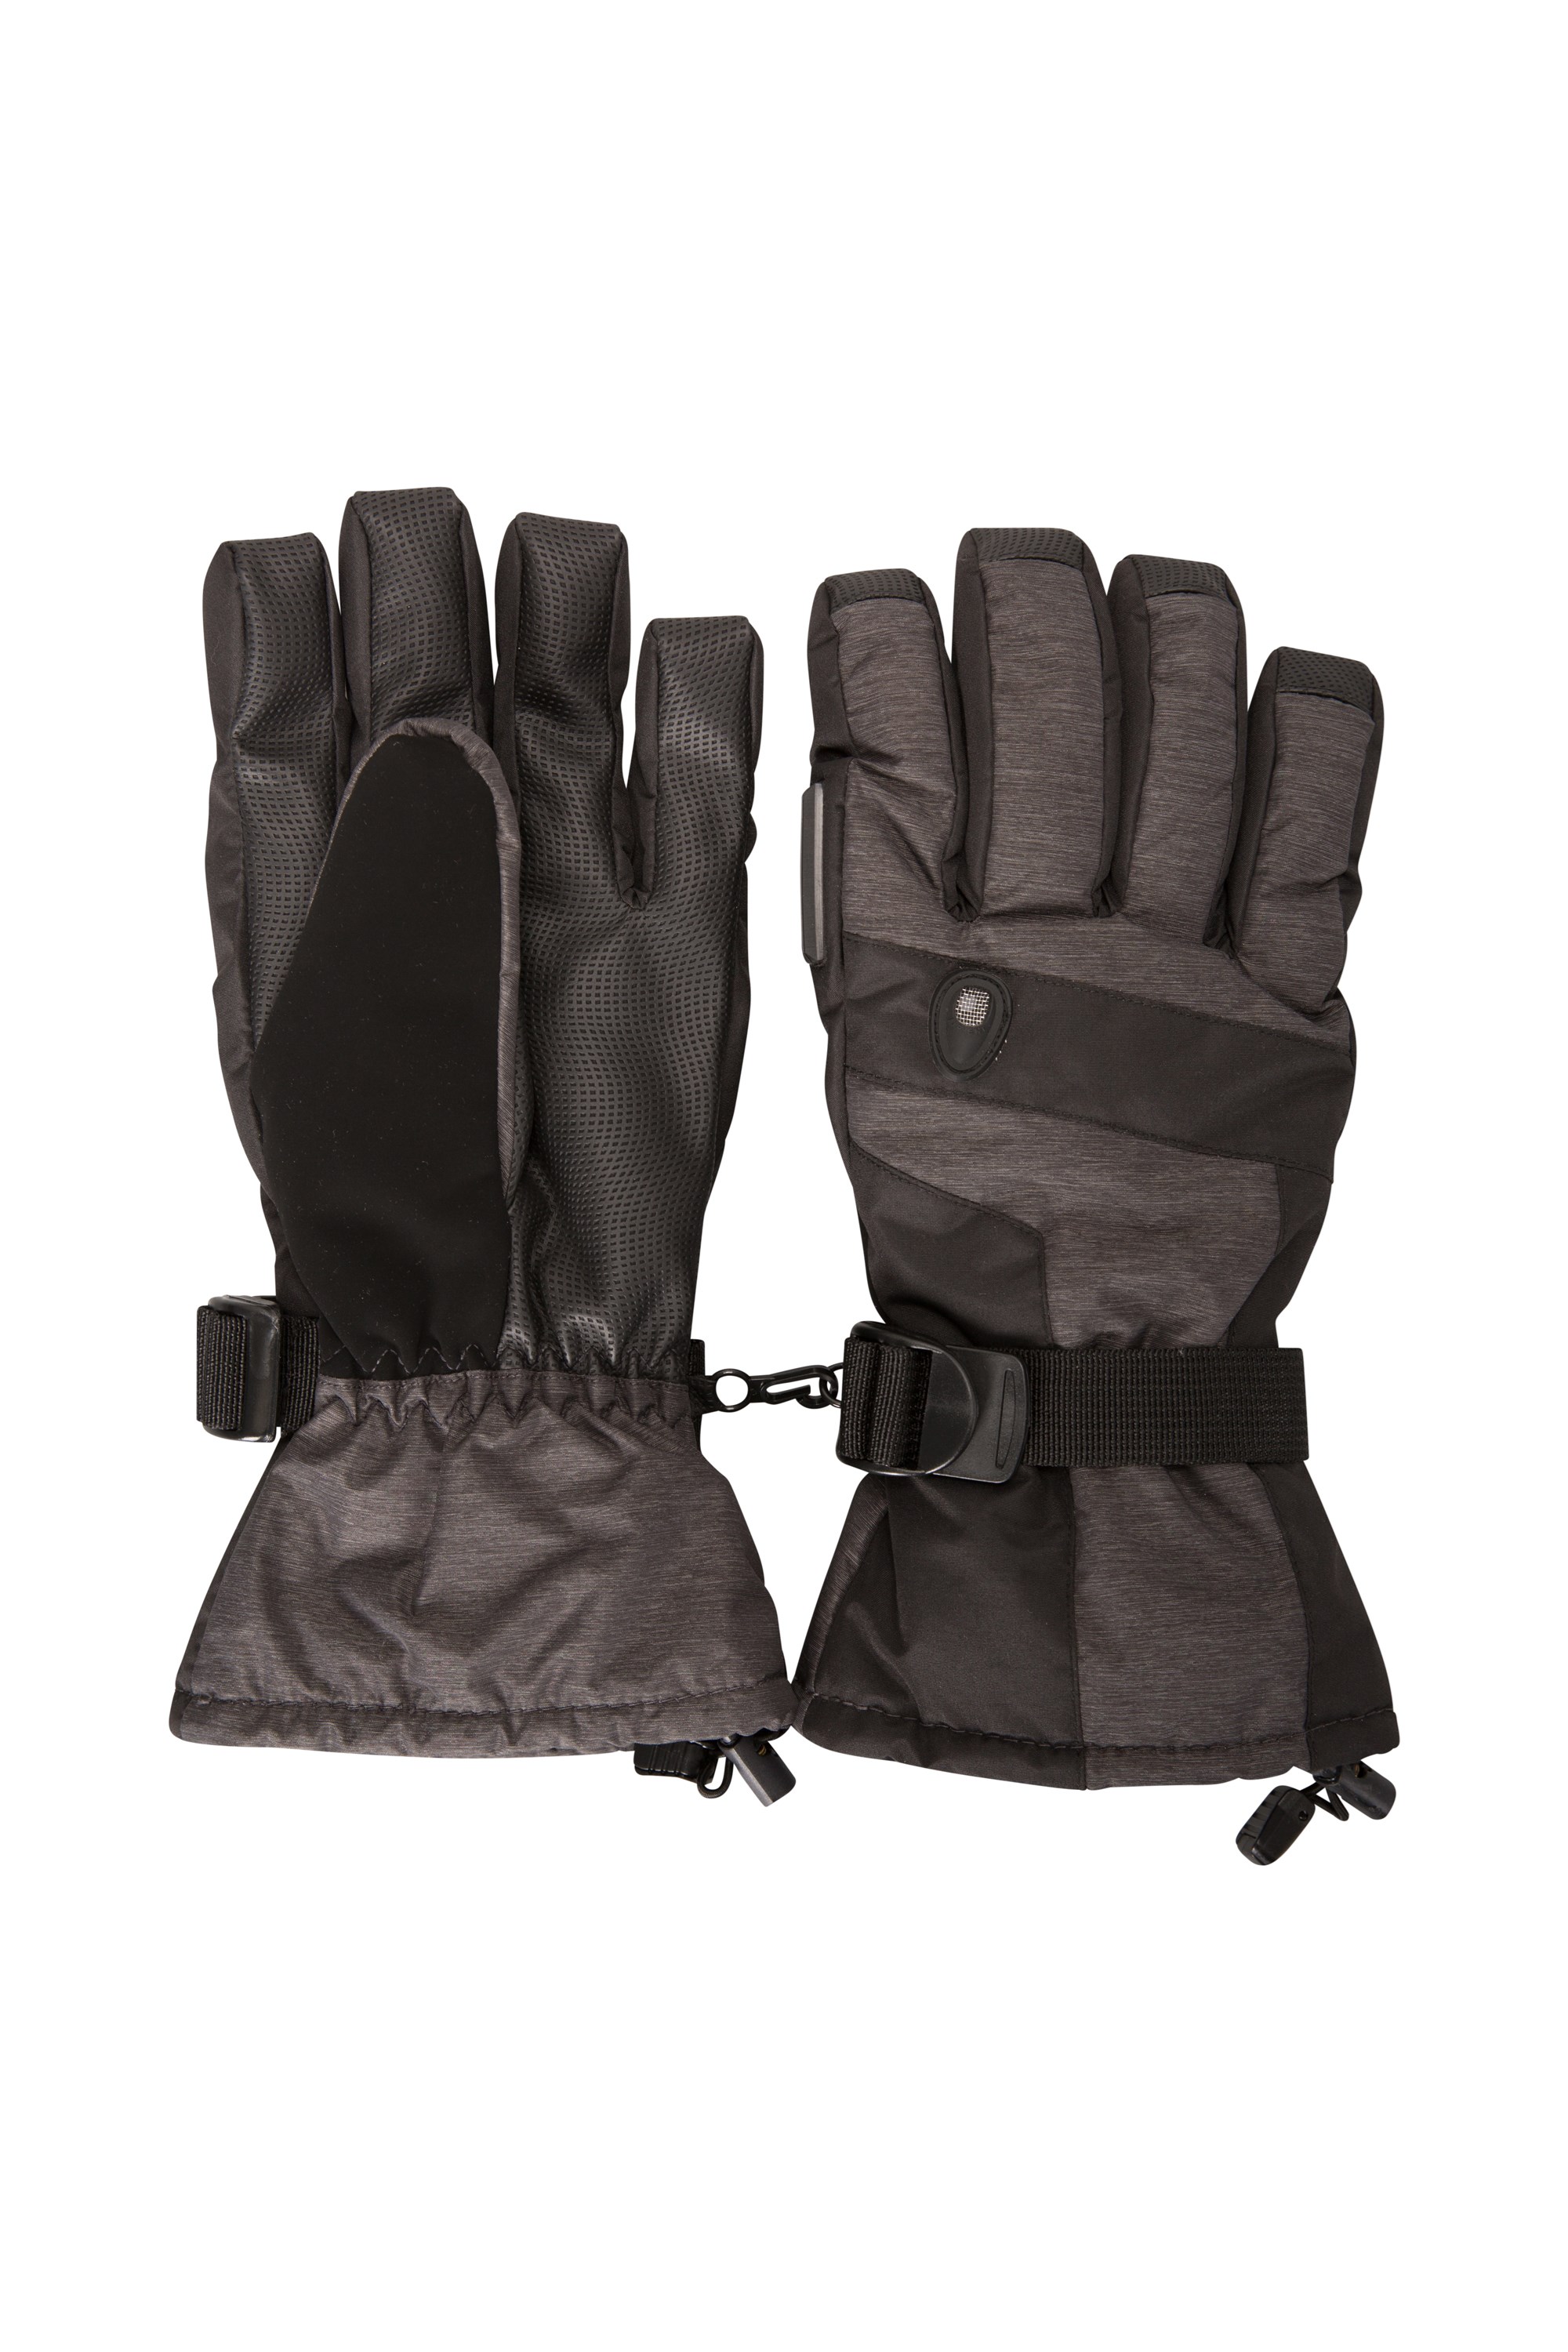 Pursuit Extreme Mens Ski Gloves - Black